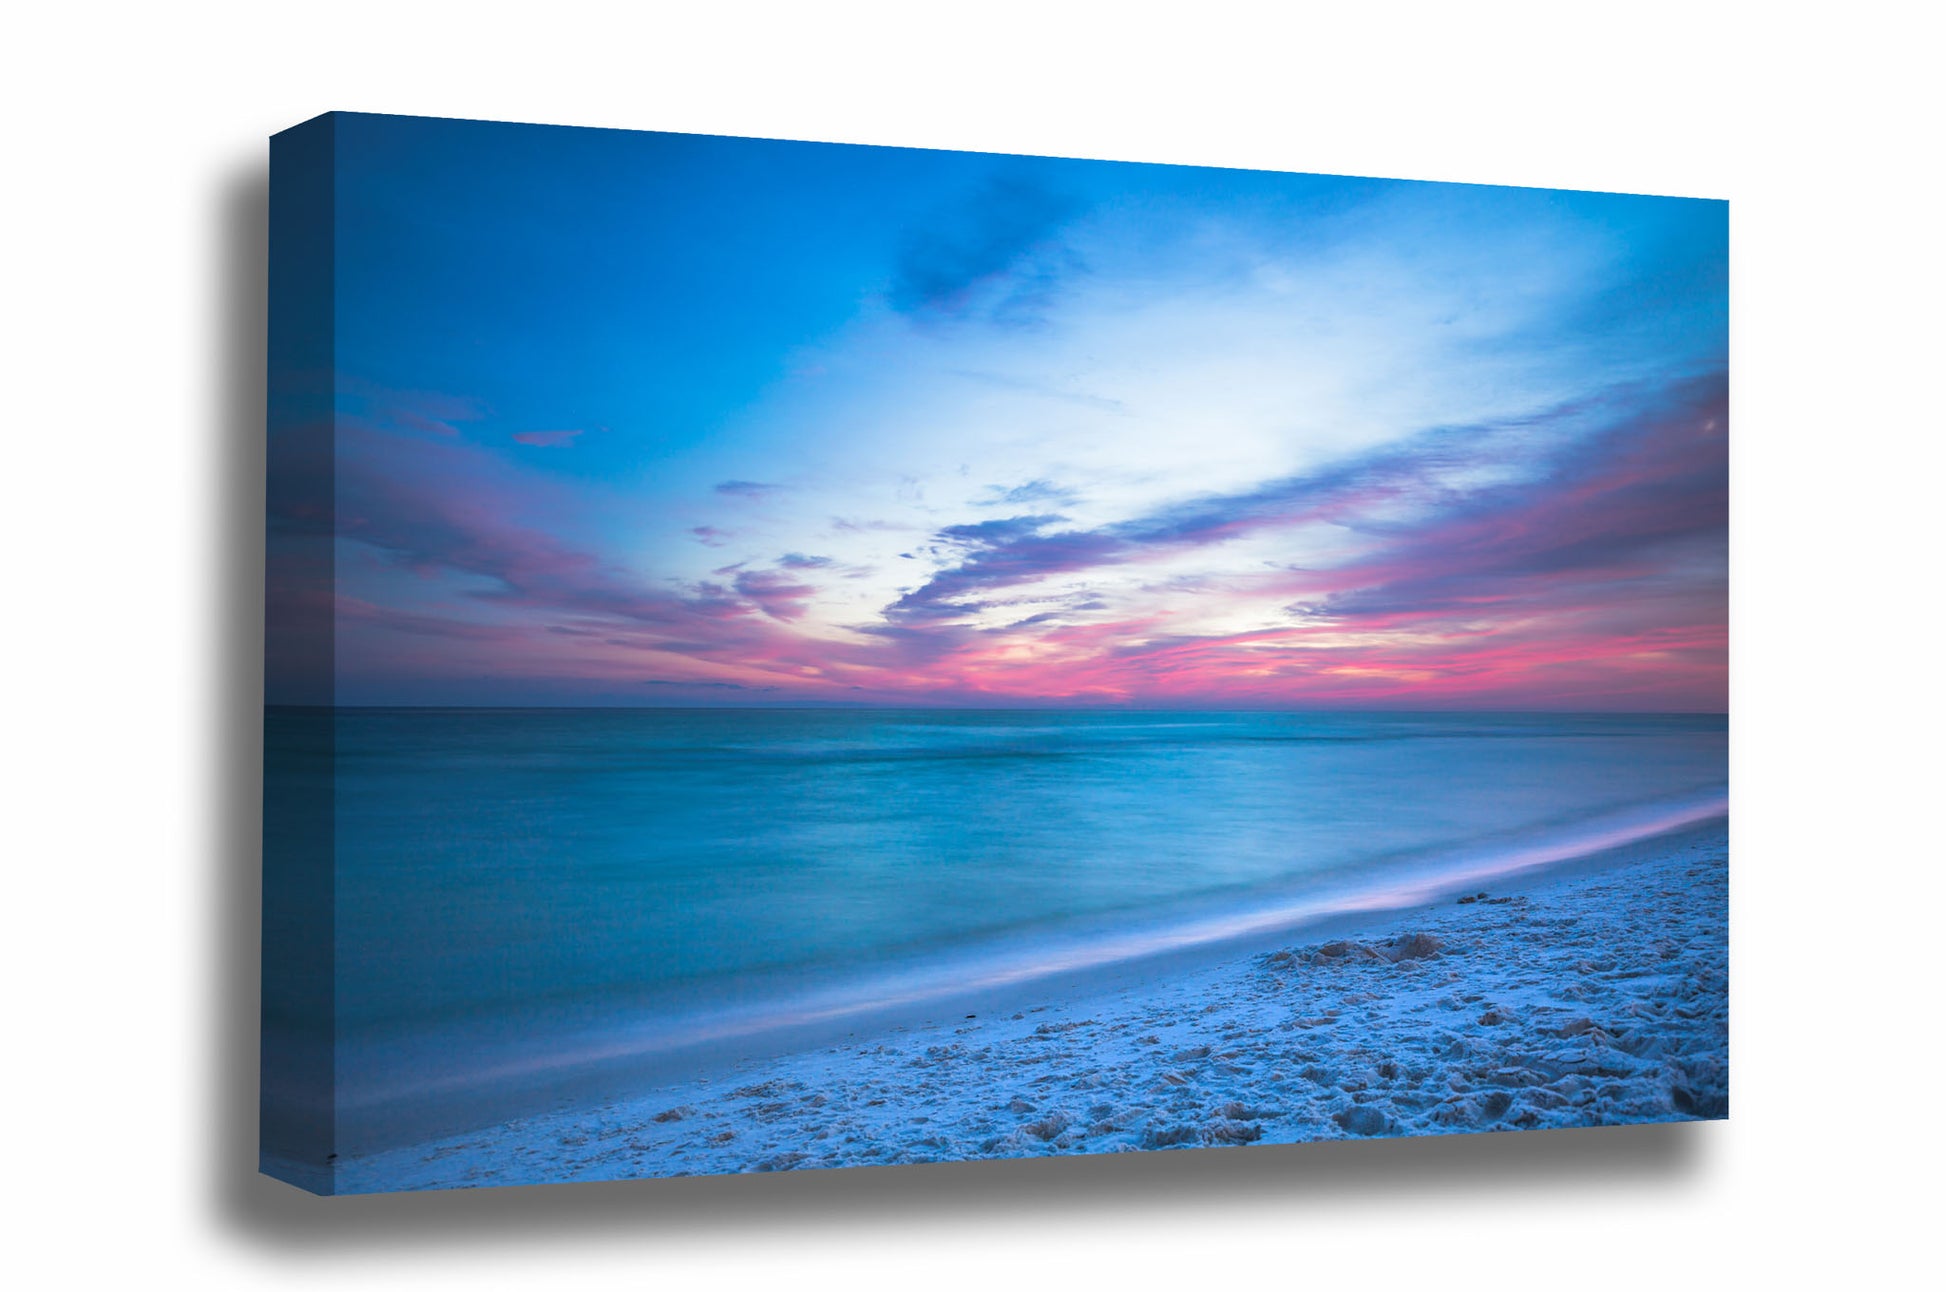 Coastal canvas wall art of a scenic sunset over the Emerald Coast along a beach near Destin, Florida by Sean Ramsey of Southern Plains Photography.